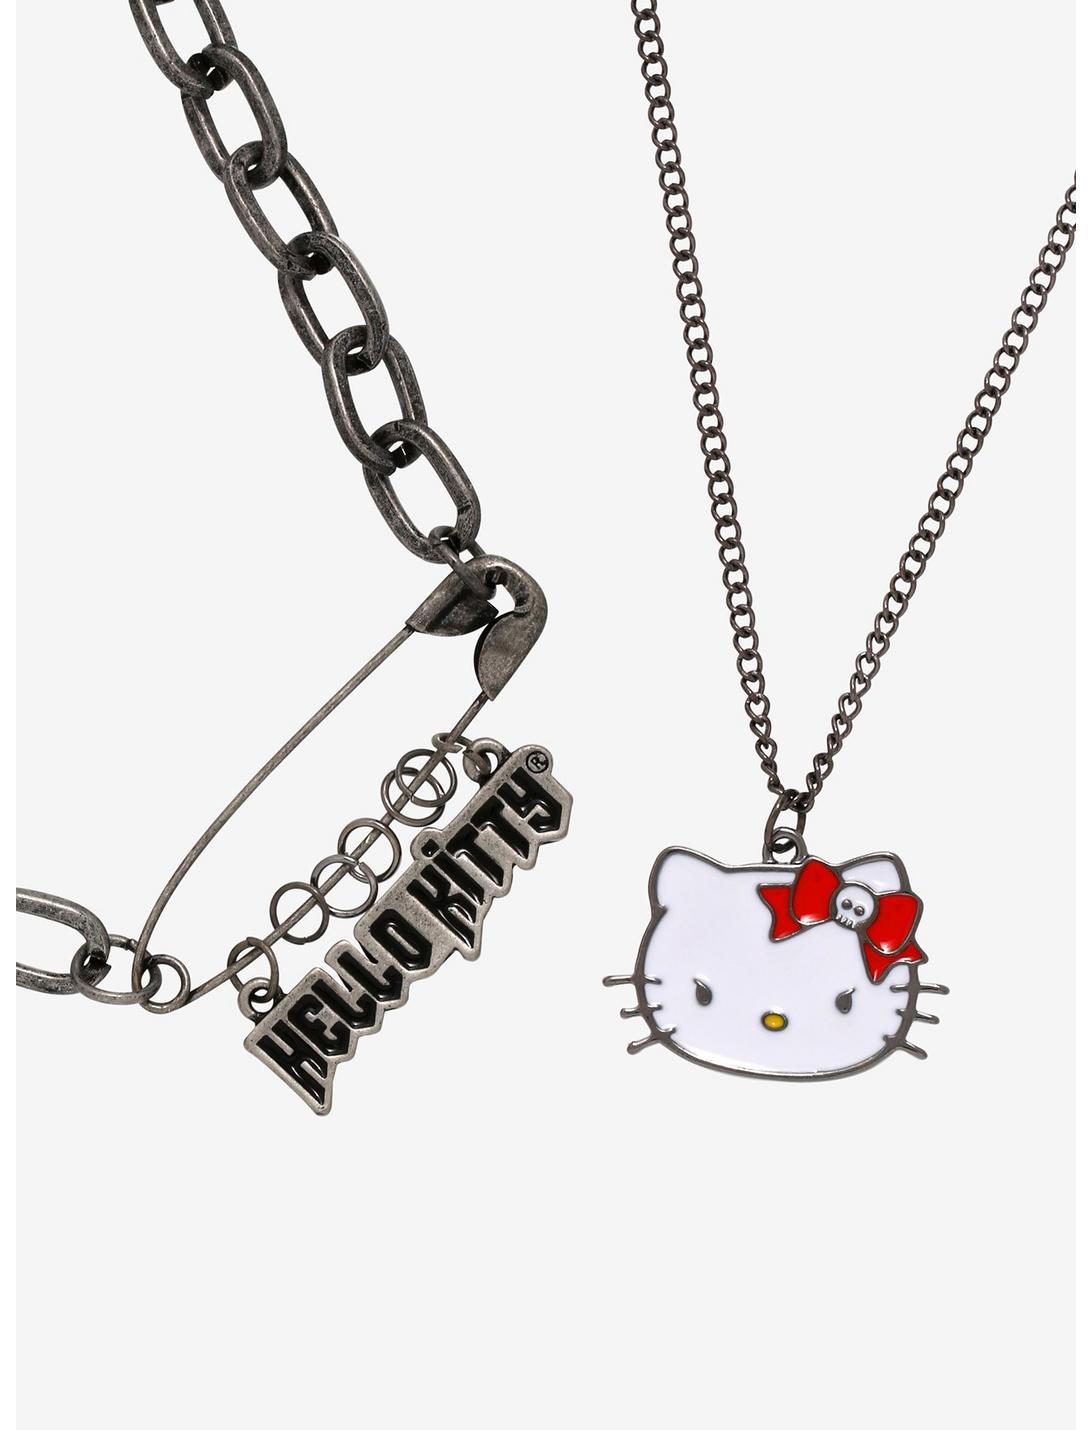 Hello Kitty Dark Safety Pin Necklace Set, , hi-res